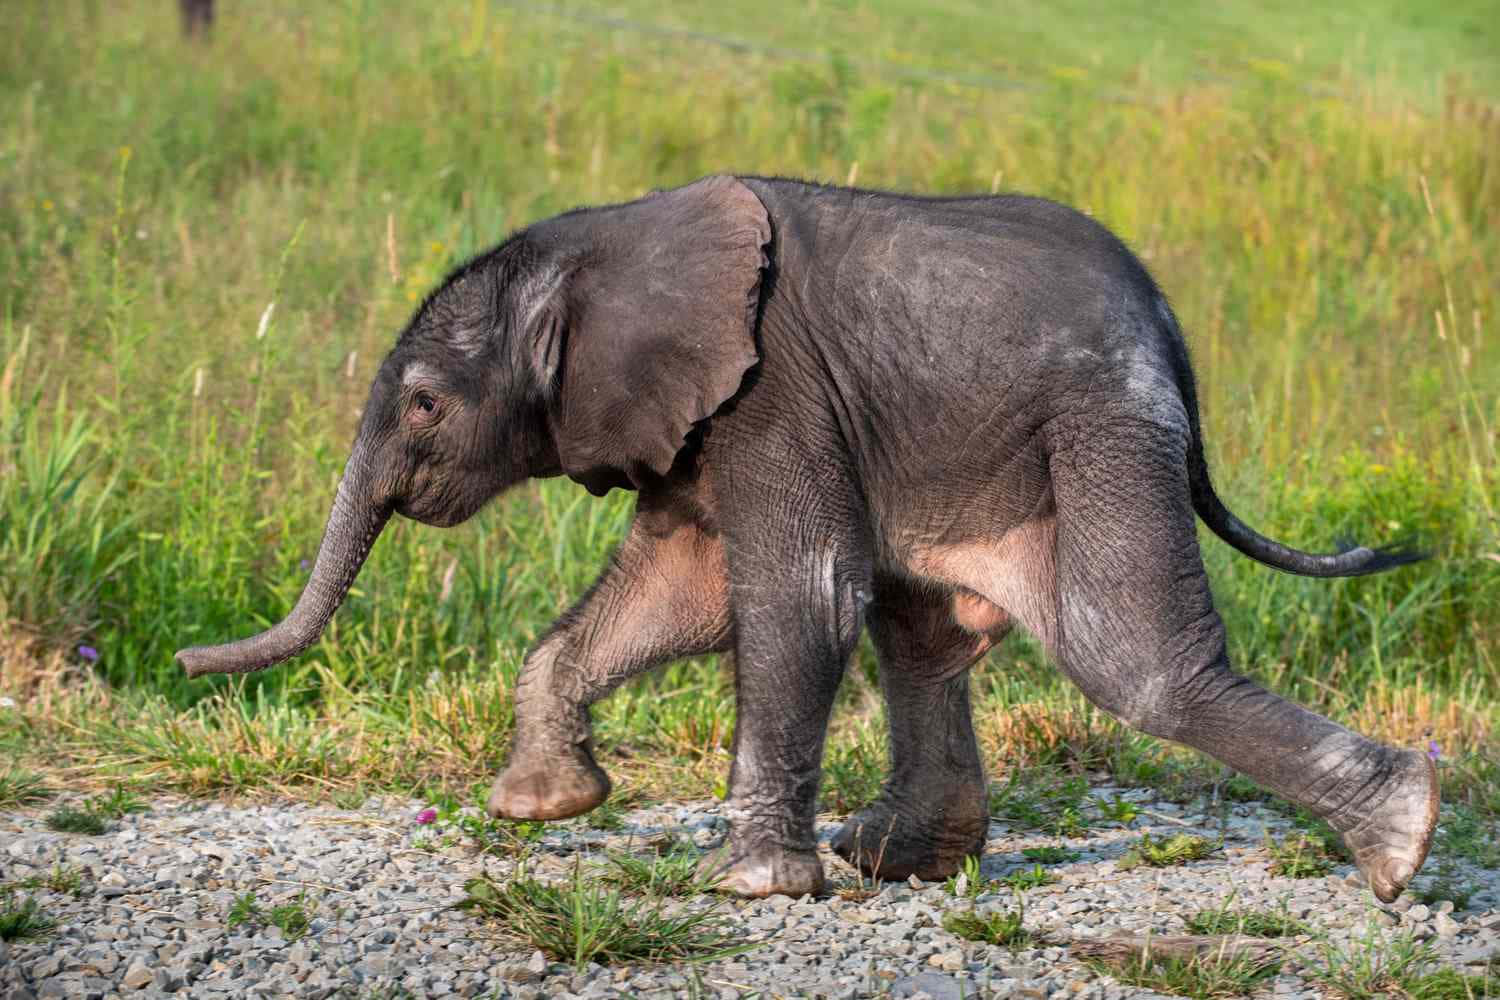 Round Baby Elephant Picture